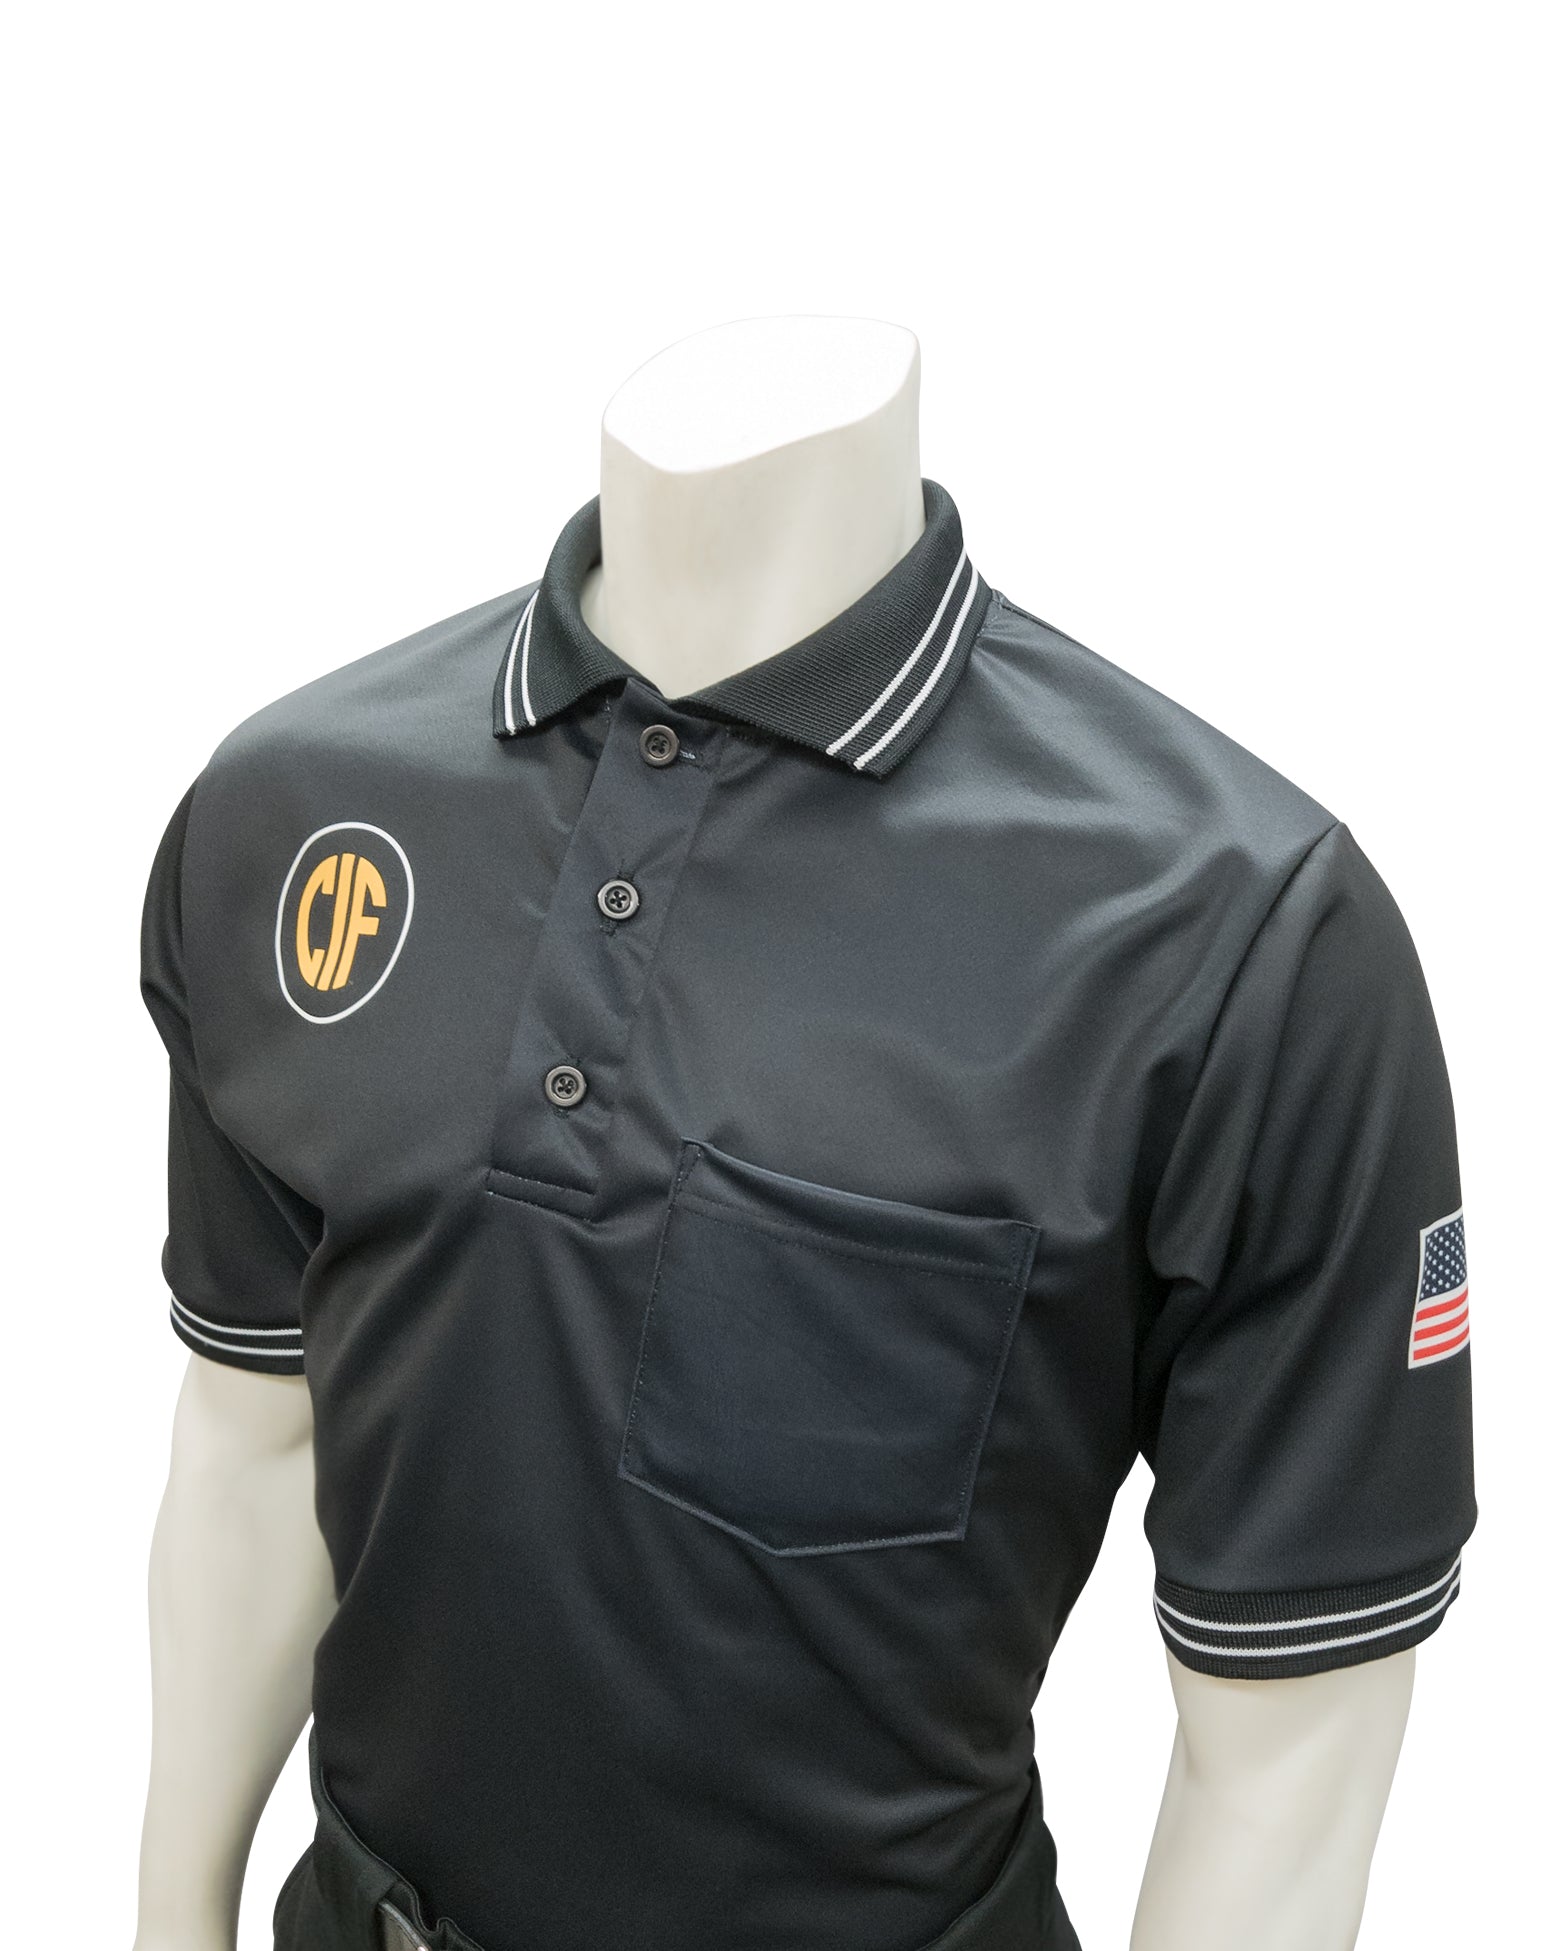 USA300CA - Smitty "Made in USA" - Short Sleeve Baseball Shirt Black